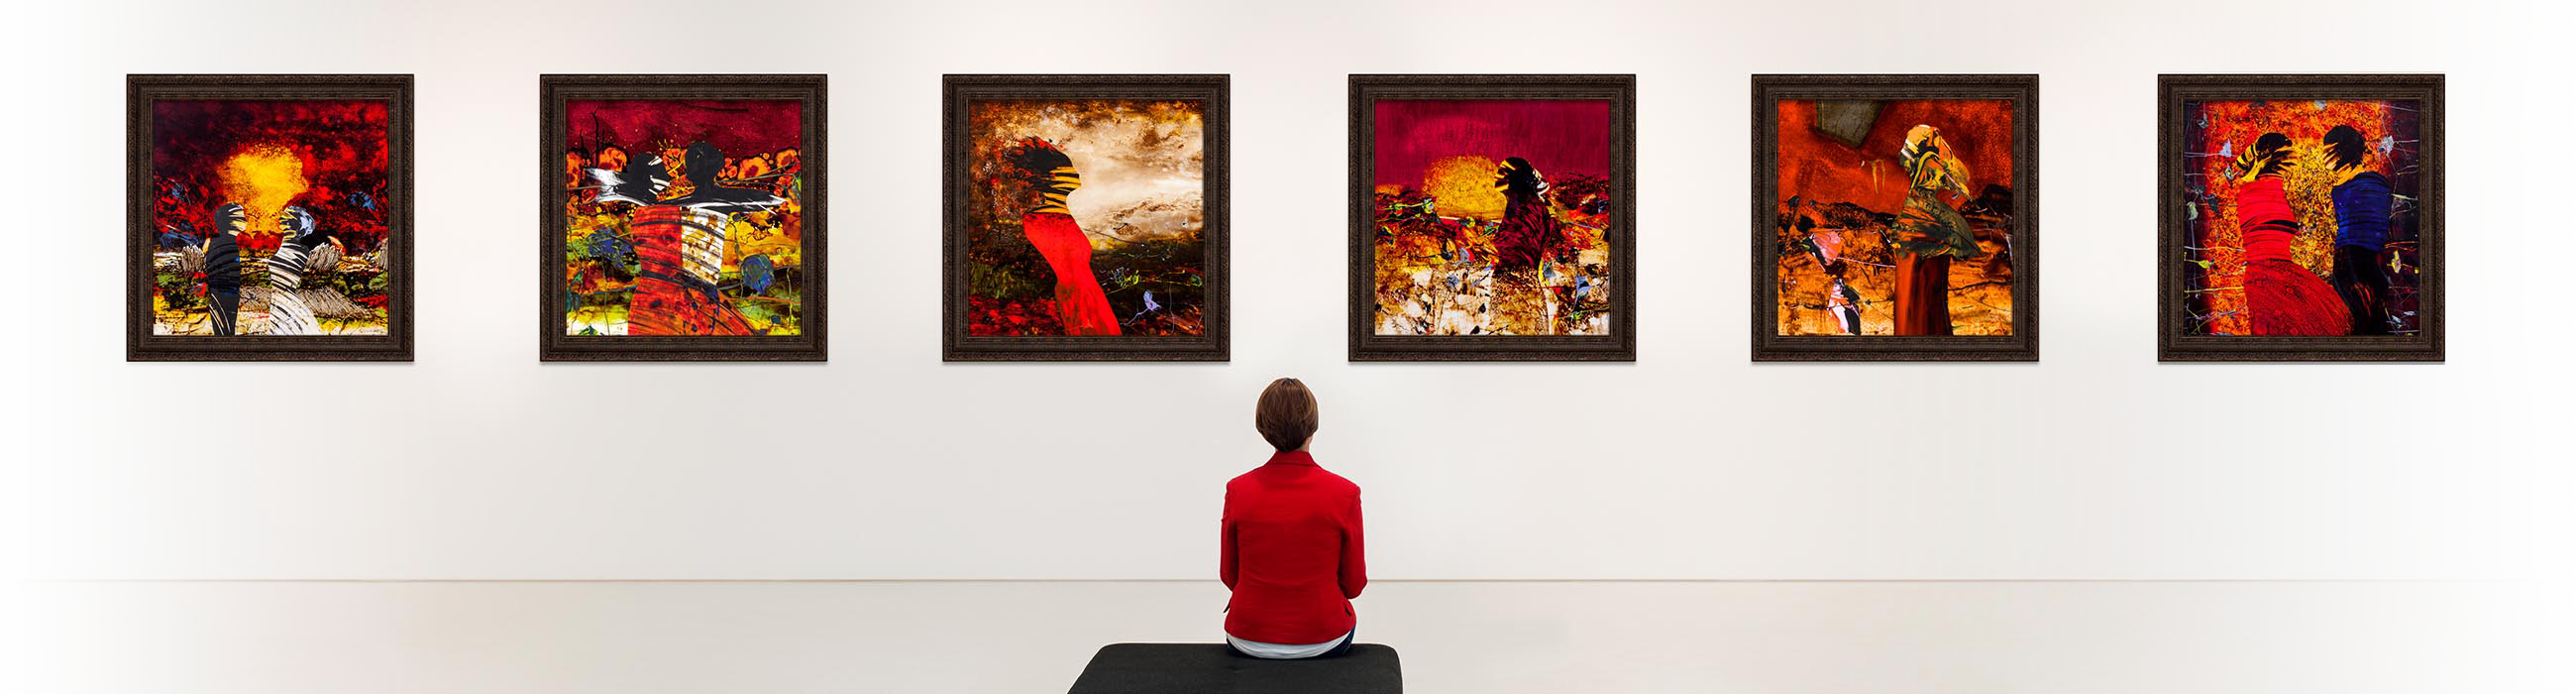 Kunst Galerie Frau betrachtet Gemälde SZ